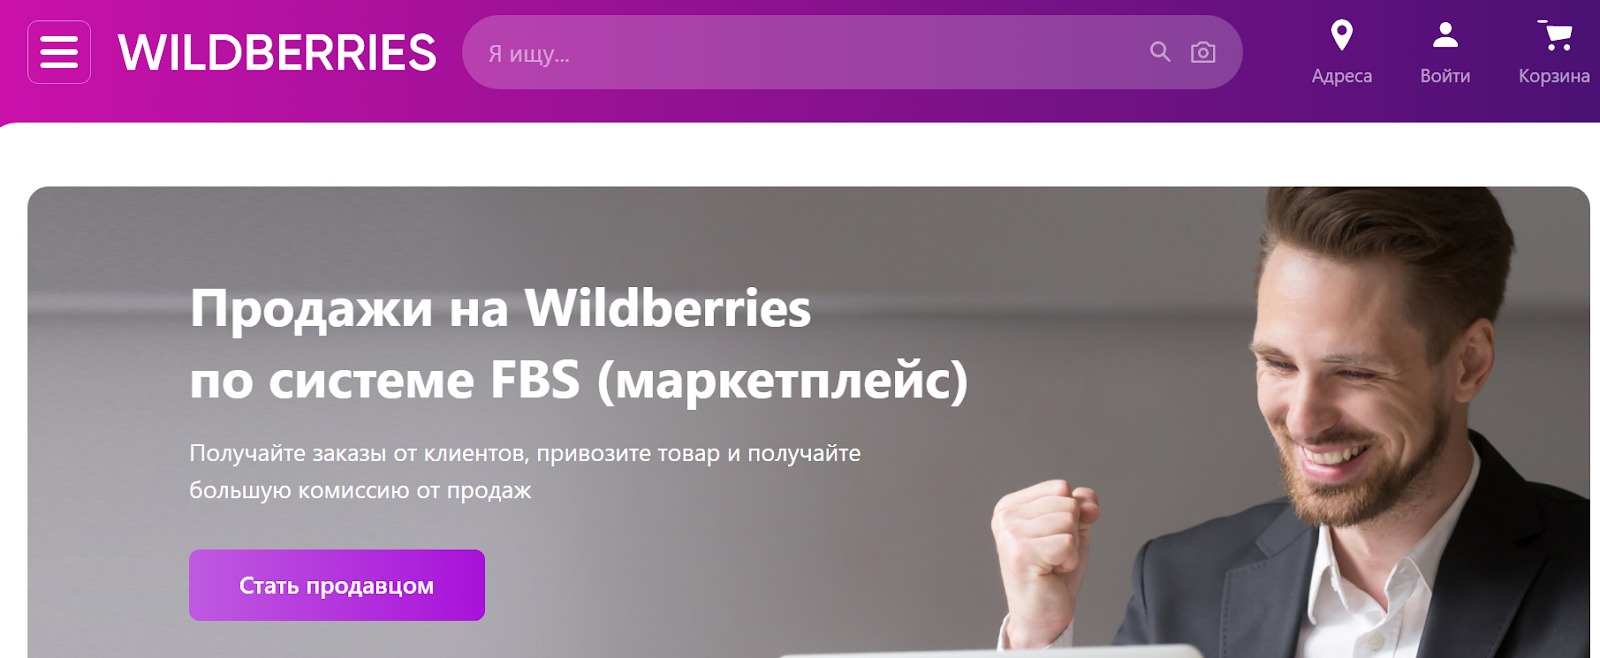 wildberries интернет работа отзывы